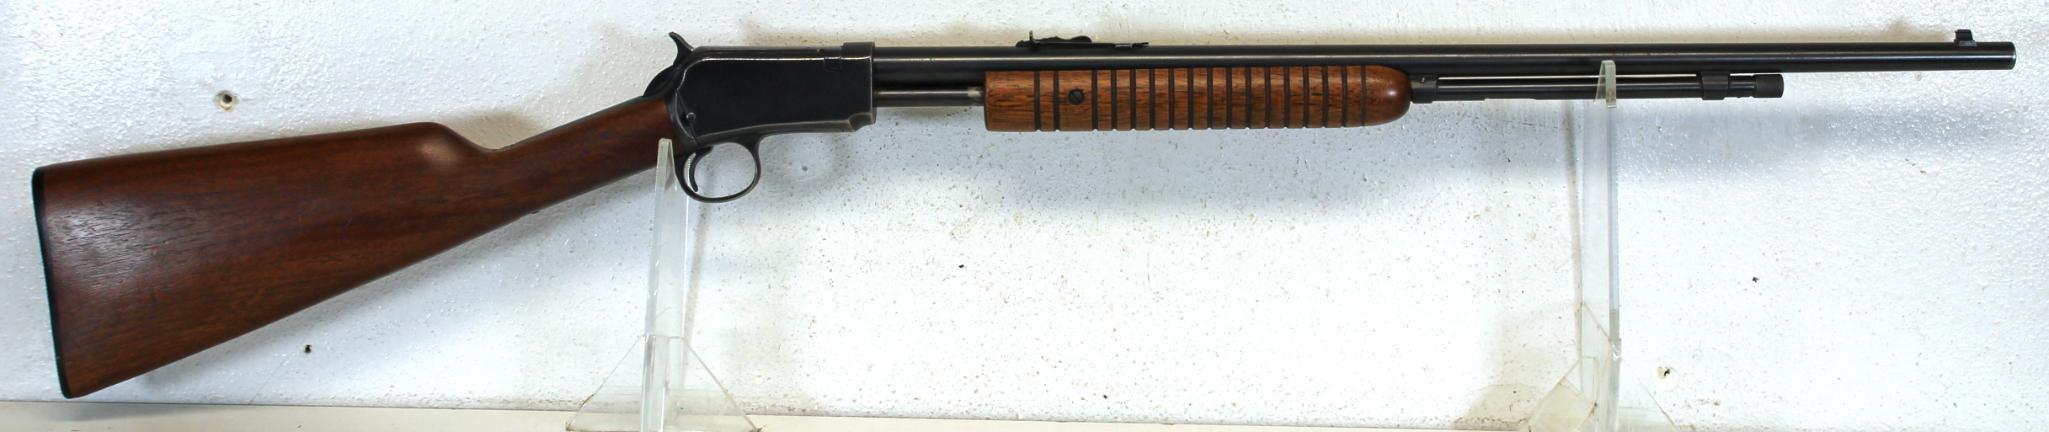 Winchester Model 62A .22 S,L,LR Slide Action Rifle Light Wear to Original Finish... SN#224752...